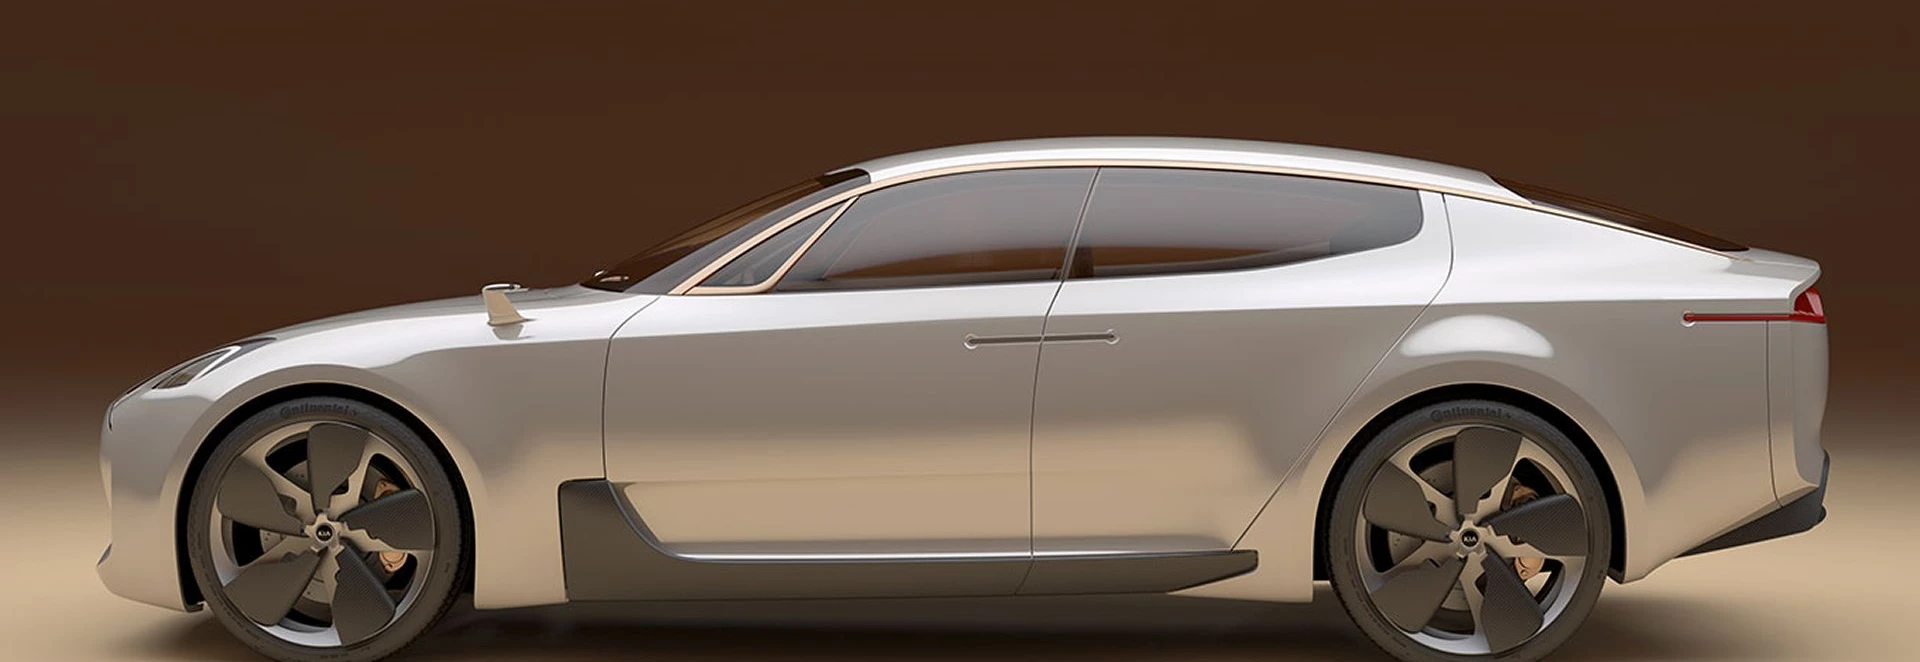 Kia will unveil new GT sports car on January 8th 